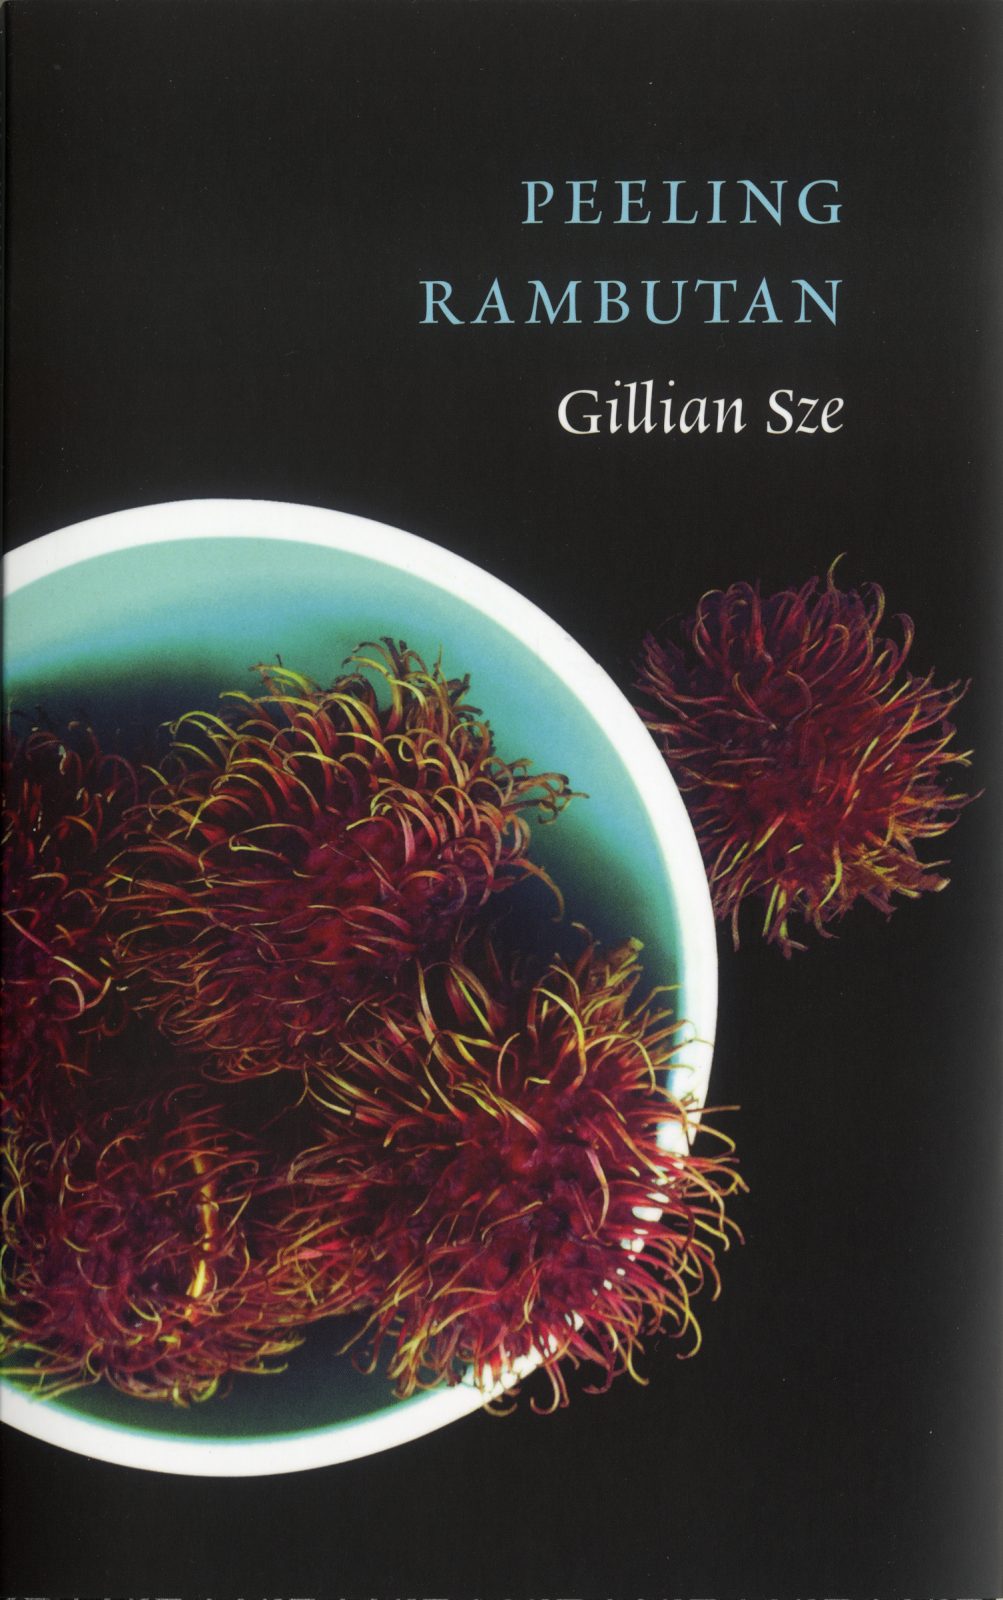 Peeling Rambutan, by Gillian Sze